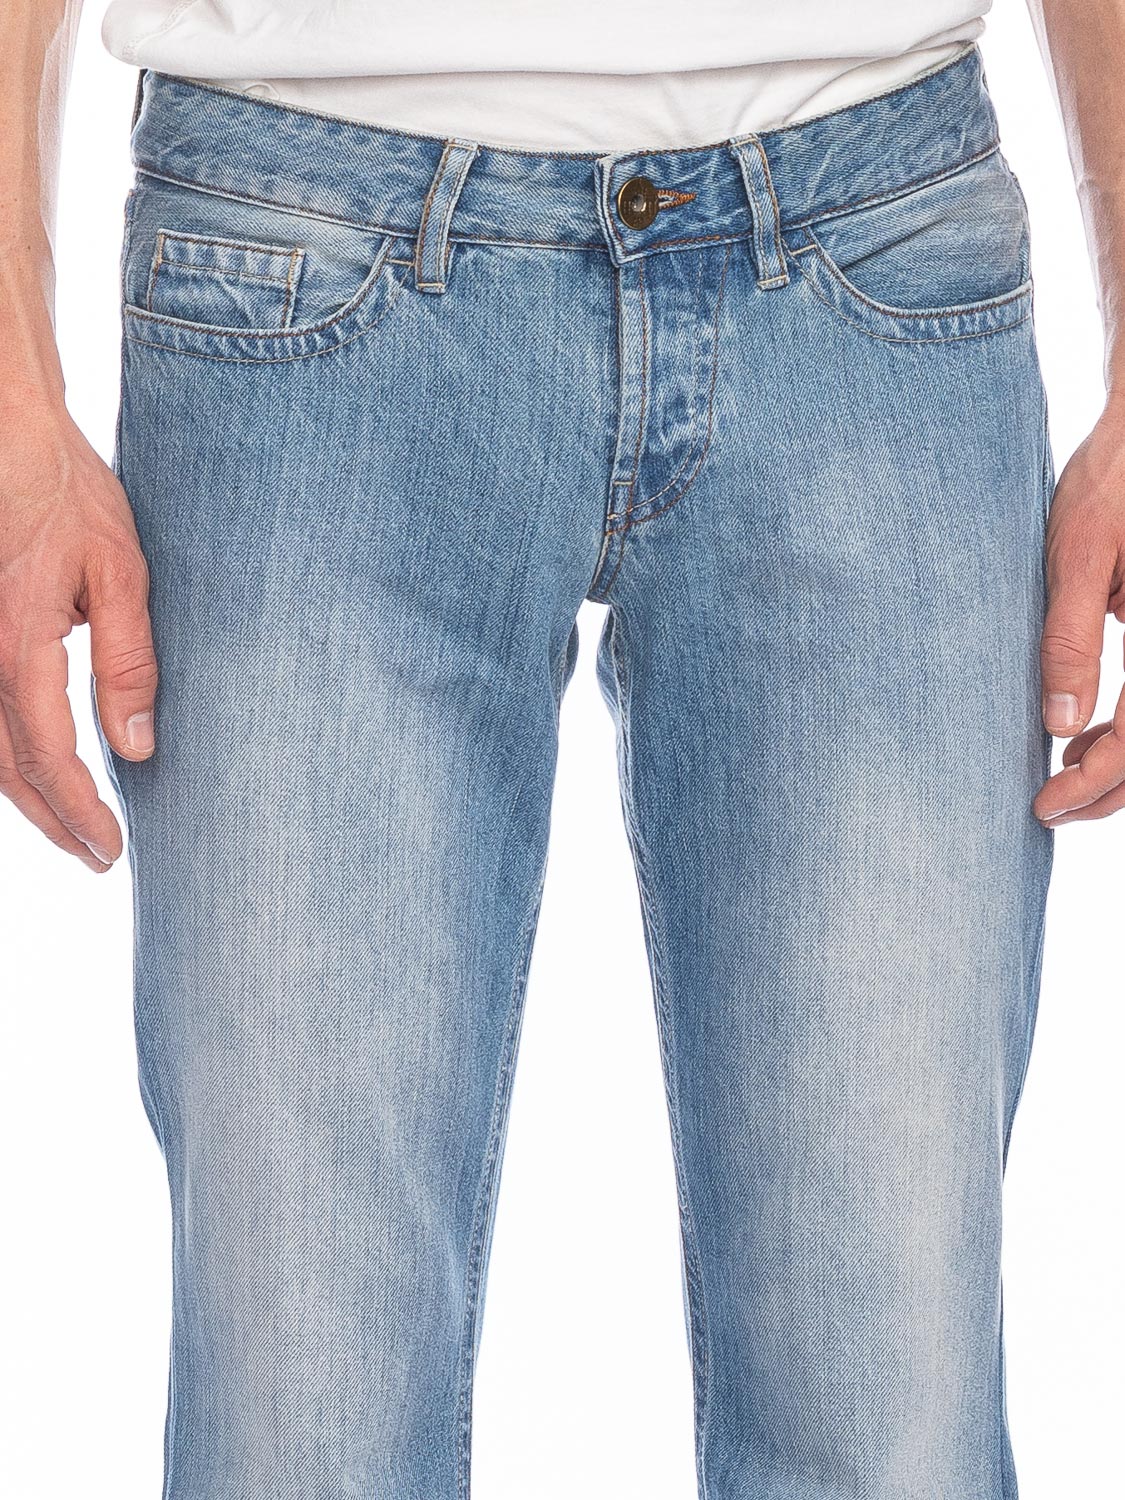 Jeans Fred GOTS RR2776 HBL USD